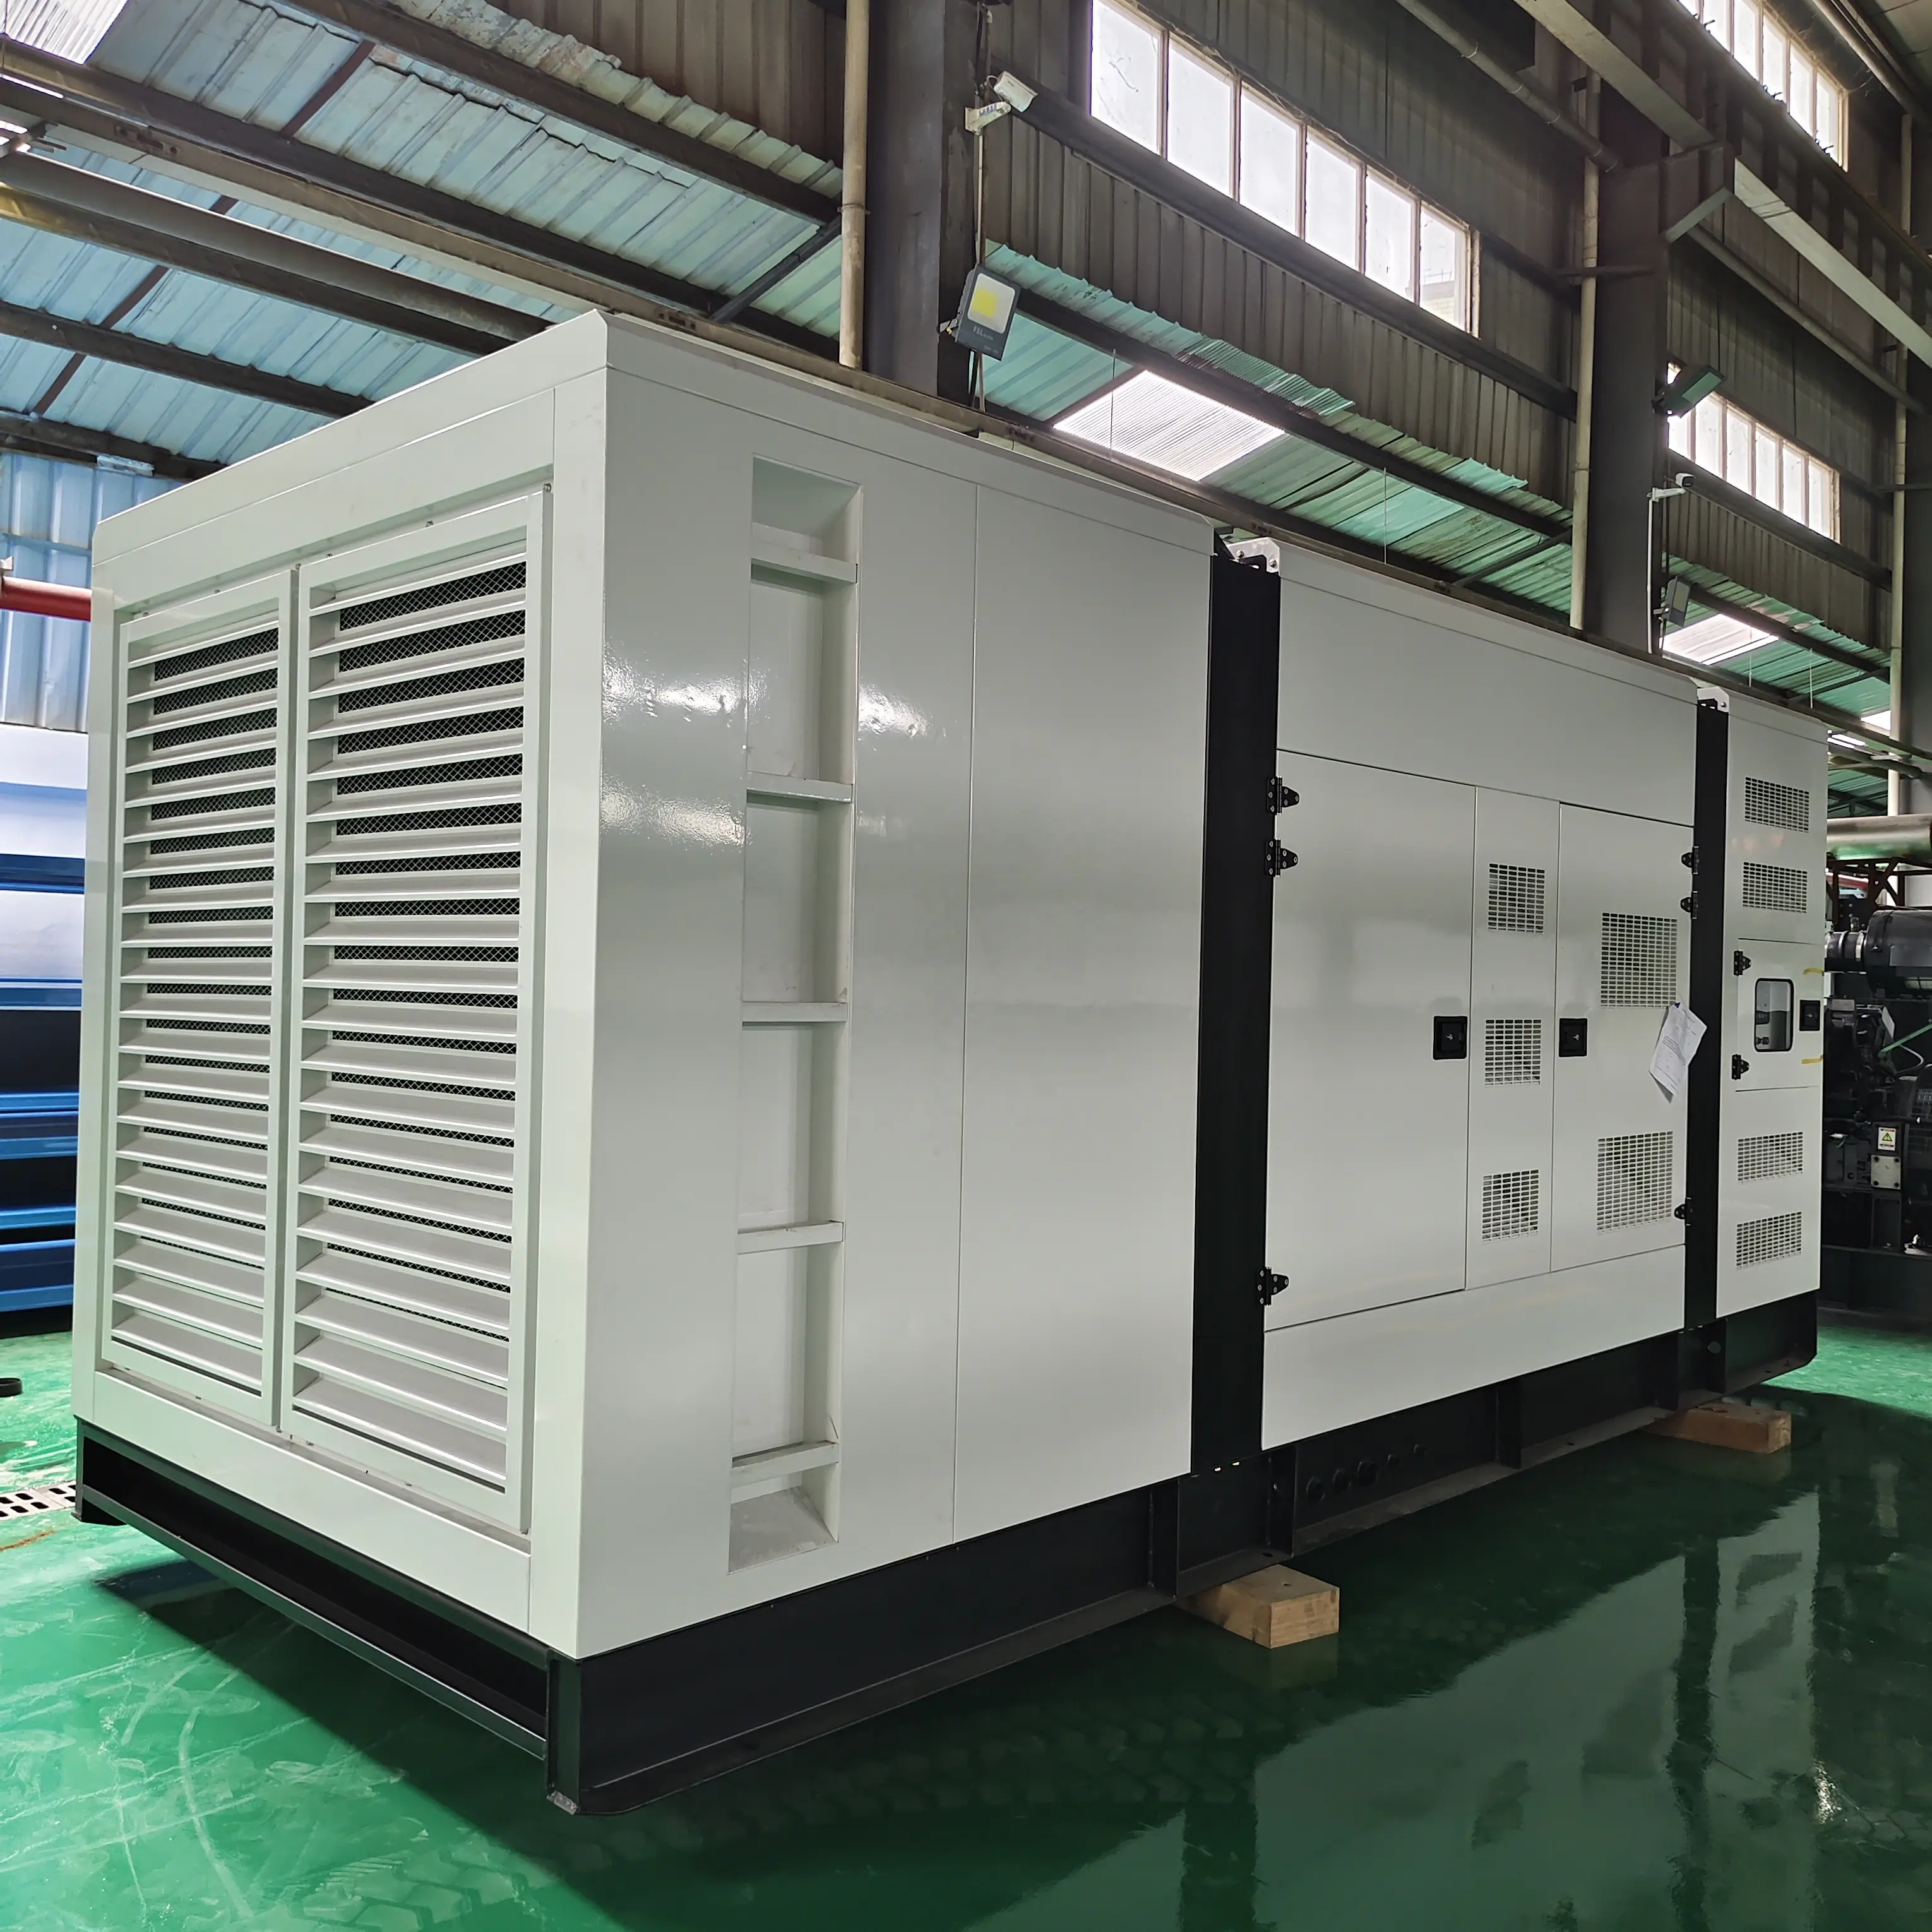 Generator Diesel 1000kva 800kw generator produsen di Cina 1100kva 880kw kedap suara generator besar